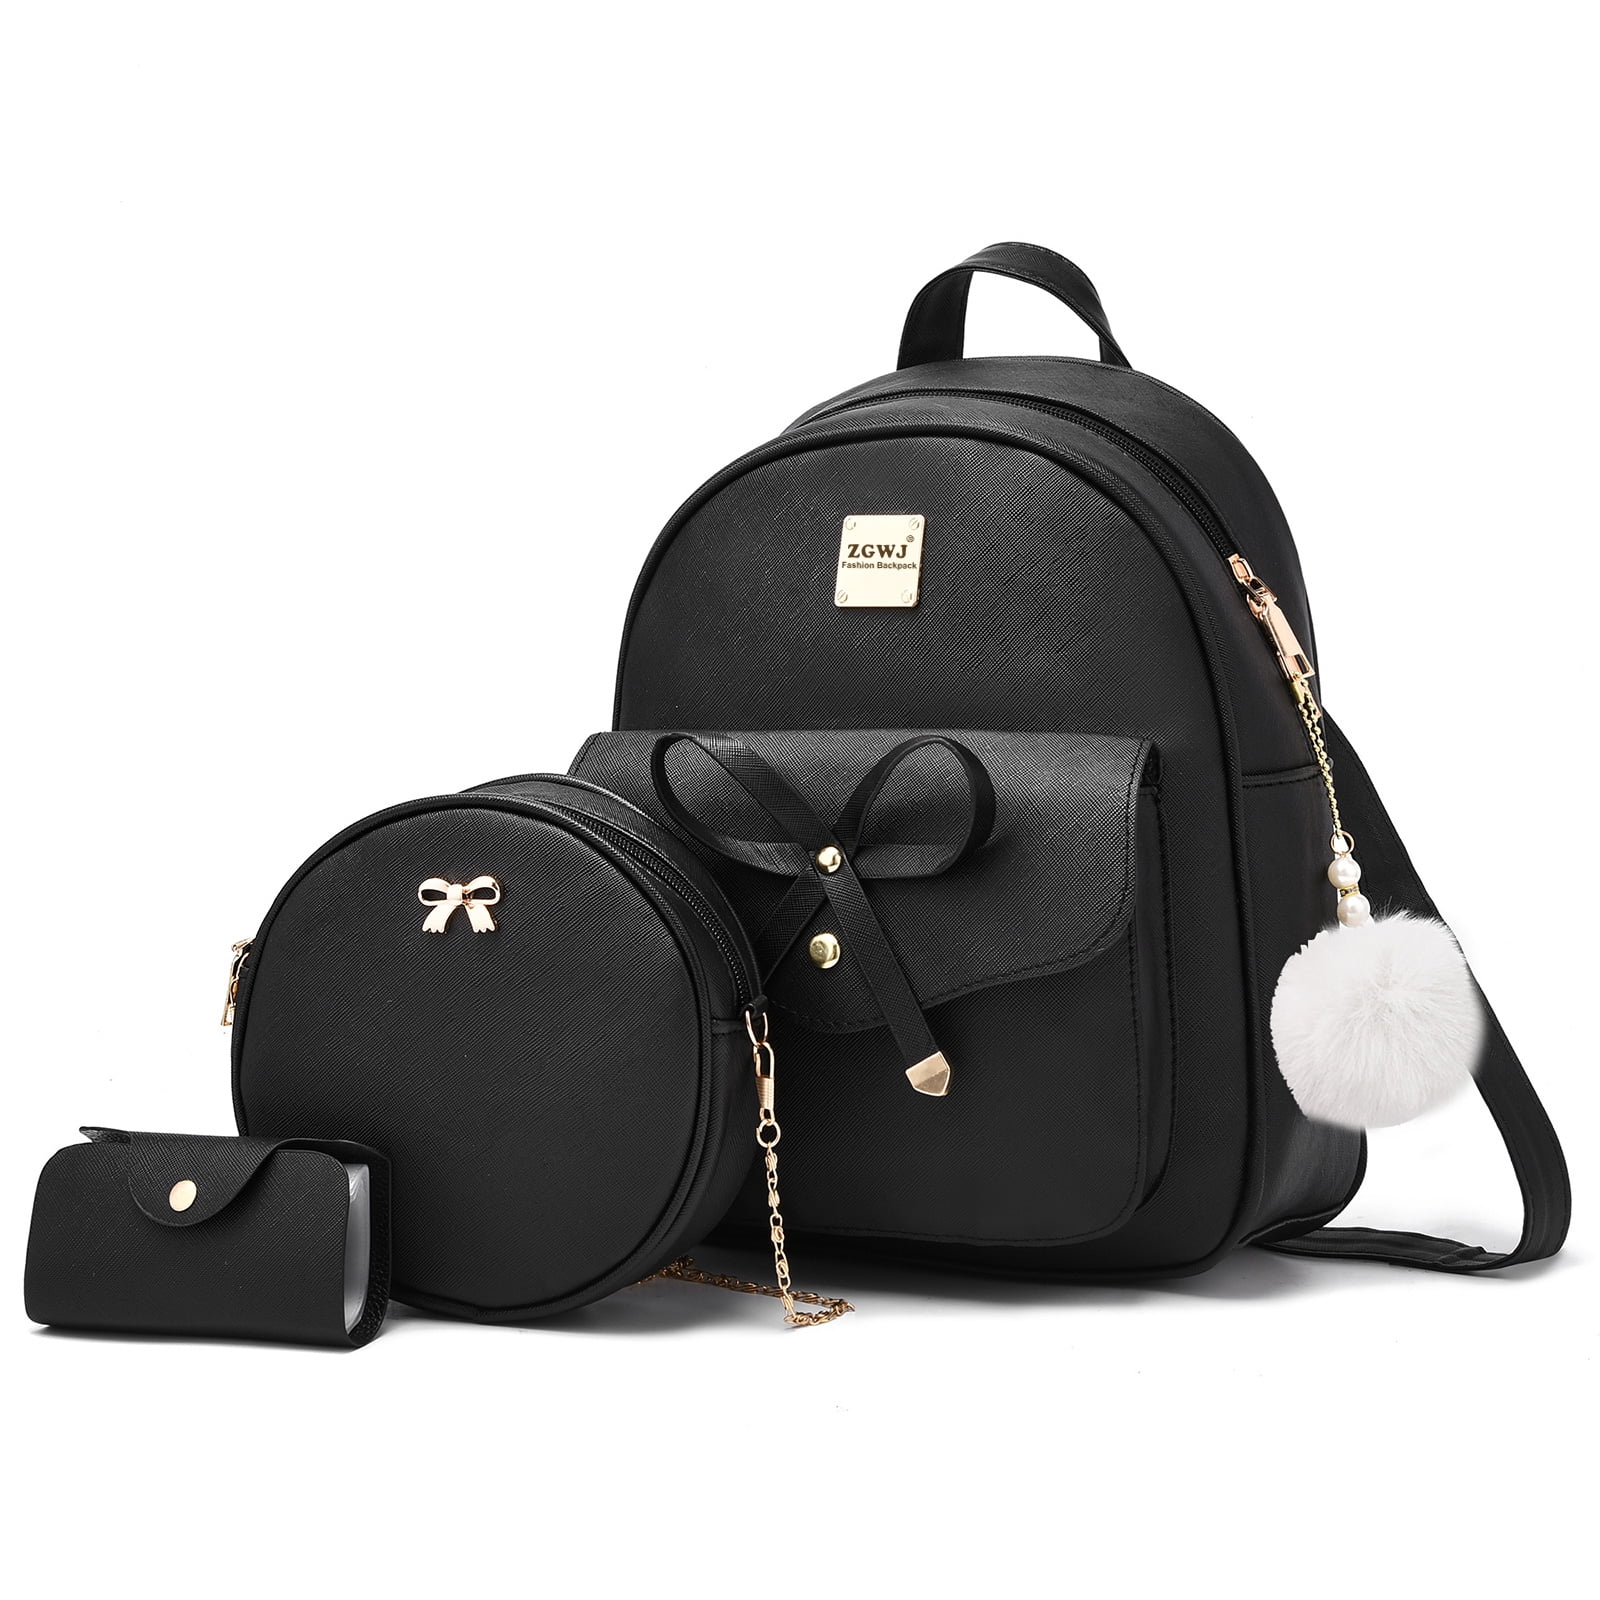 VALENTINA Leather BACKPACK Made In ITALY Handbag Purse Black | eBay